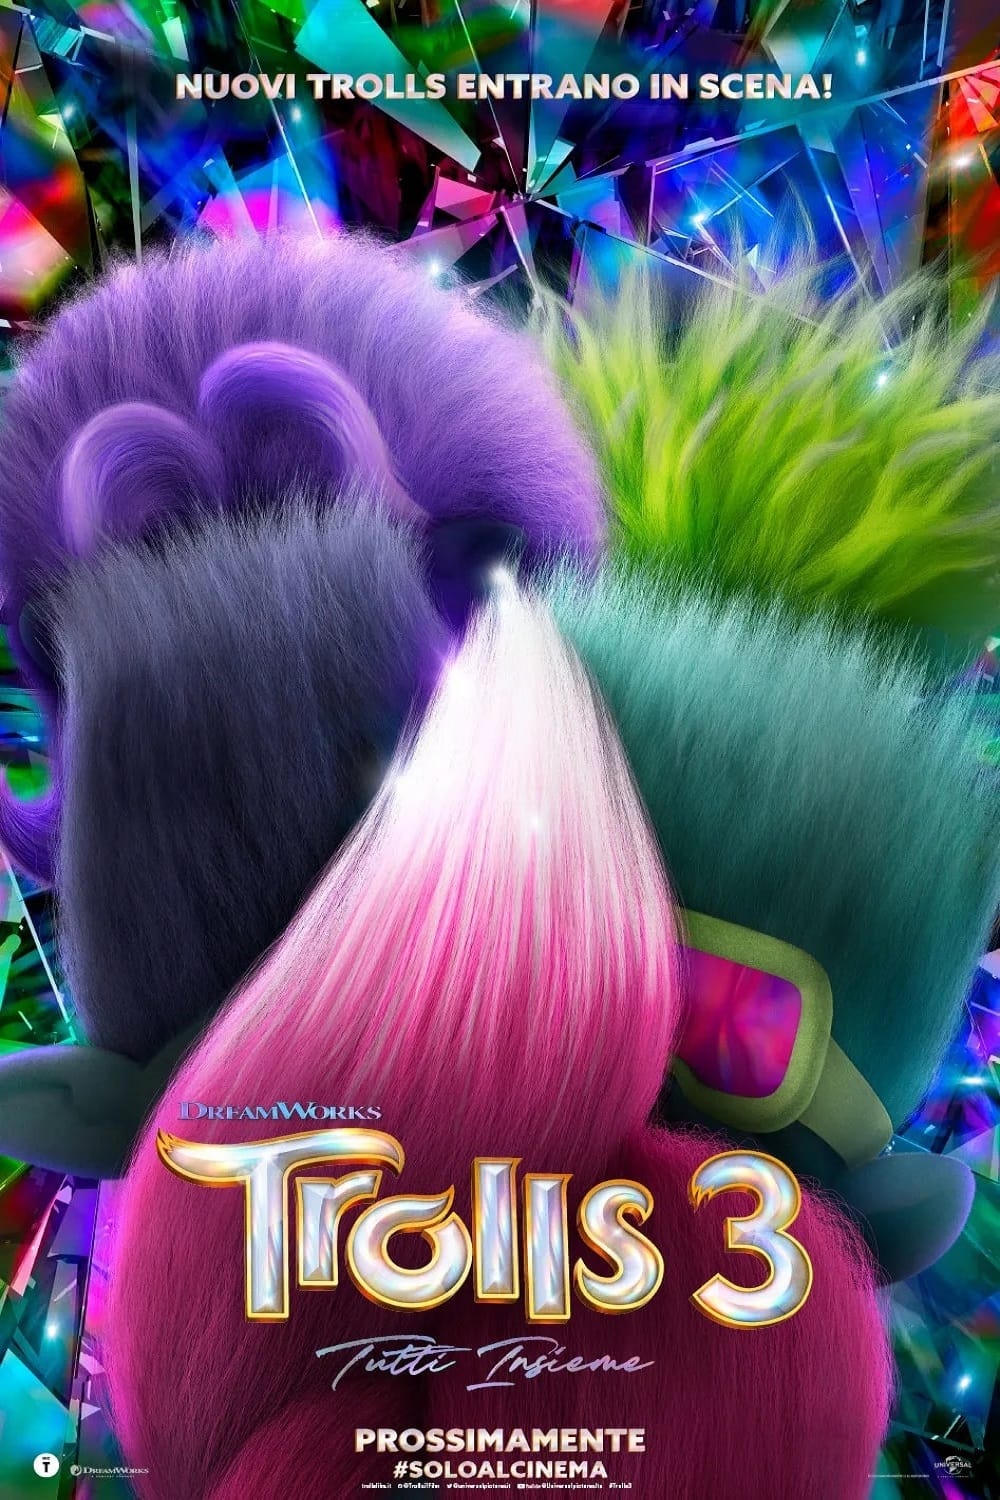 Trolls Band Together โทรลล์ส 3 (2023)